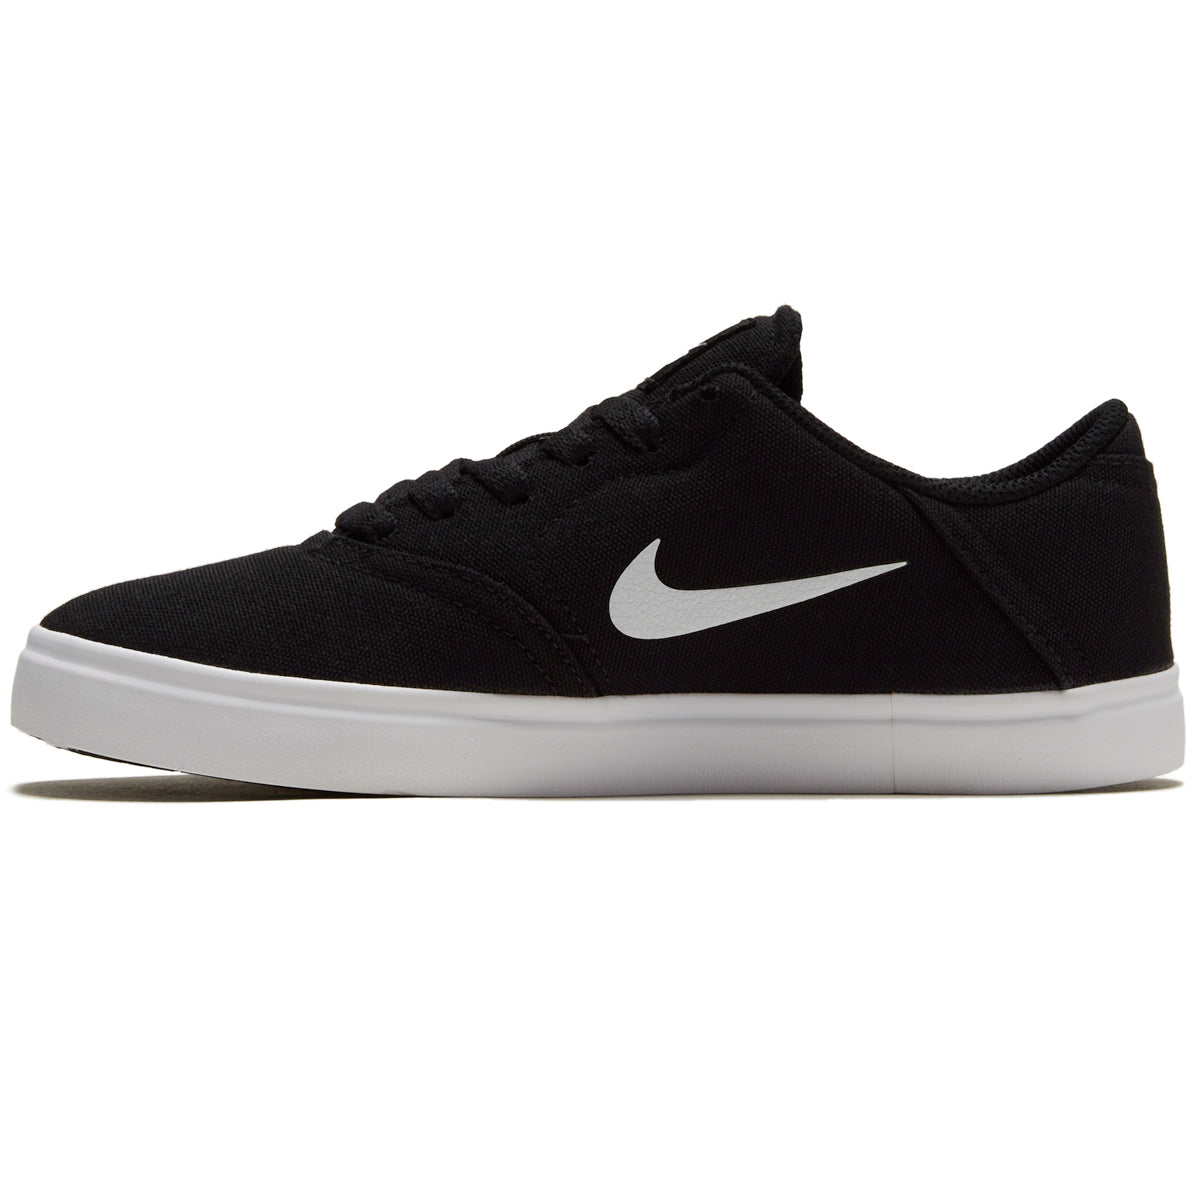 Nike SB Youth Check Canvas Shoes - Black/White image 2